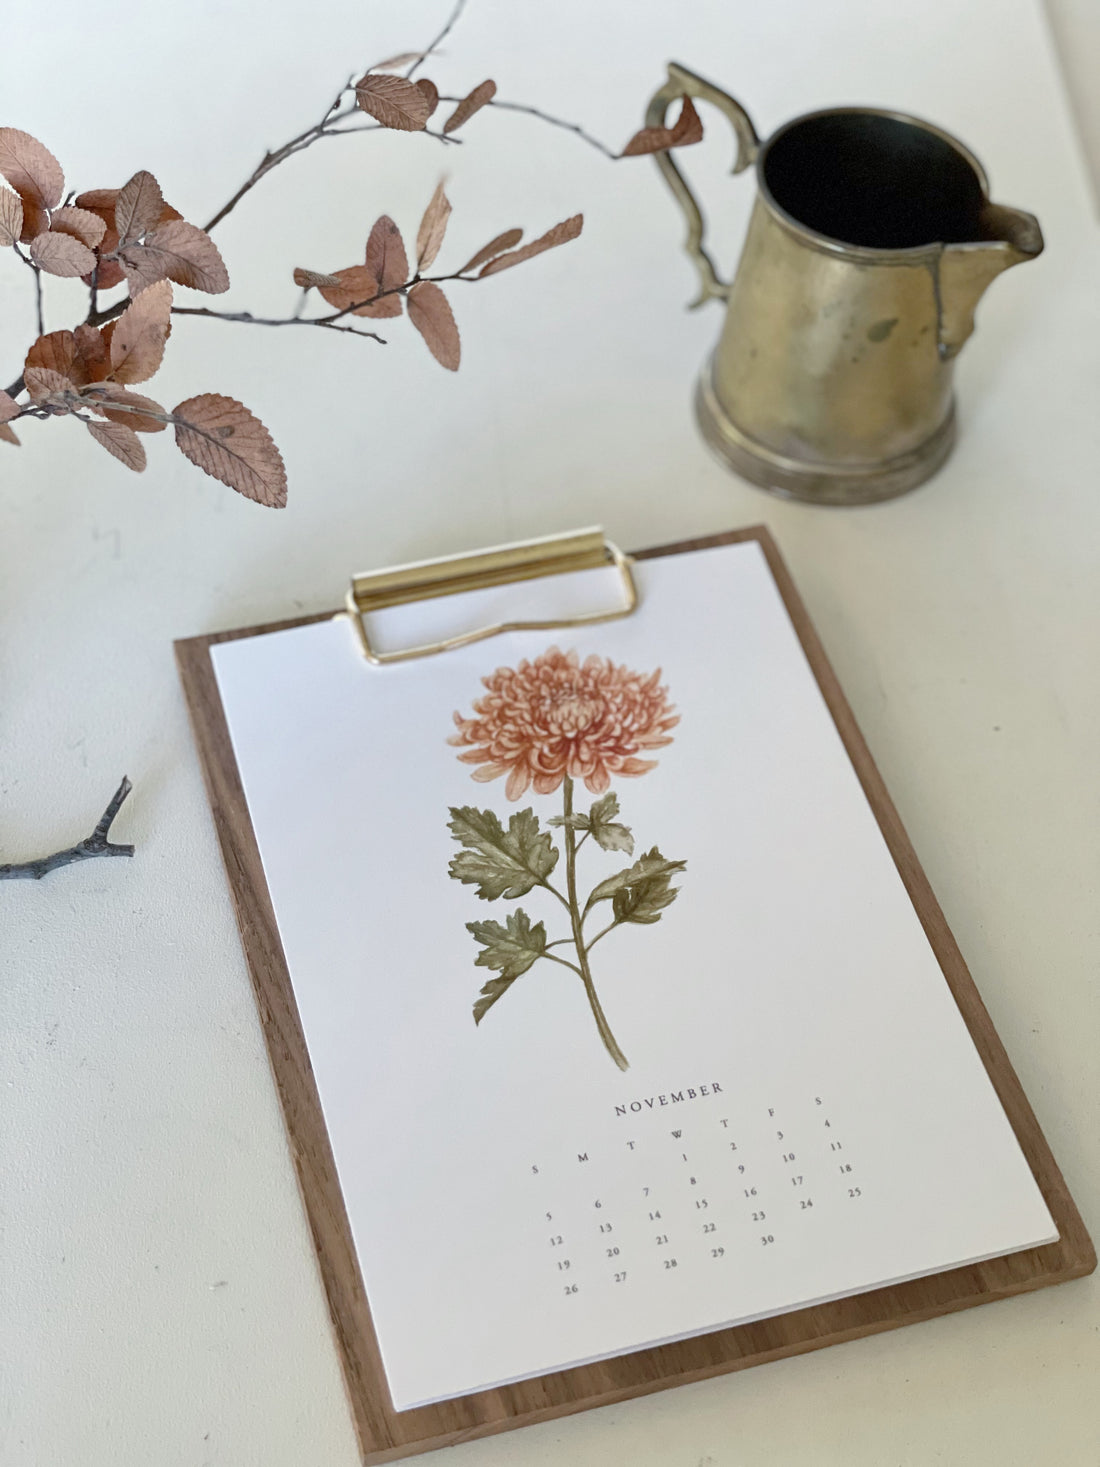 Flower Garden Desk Calendar Refill - Portrait (2024)